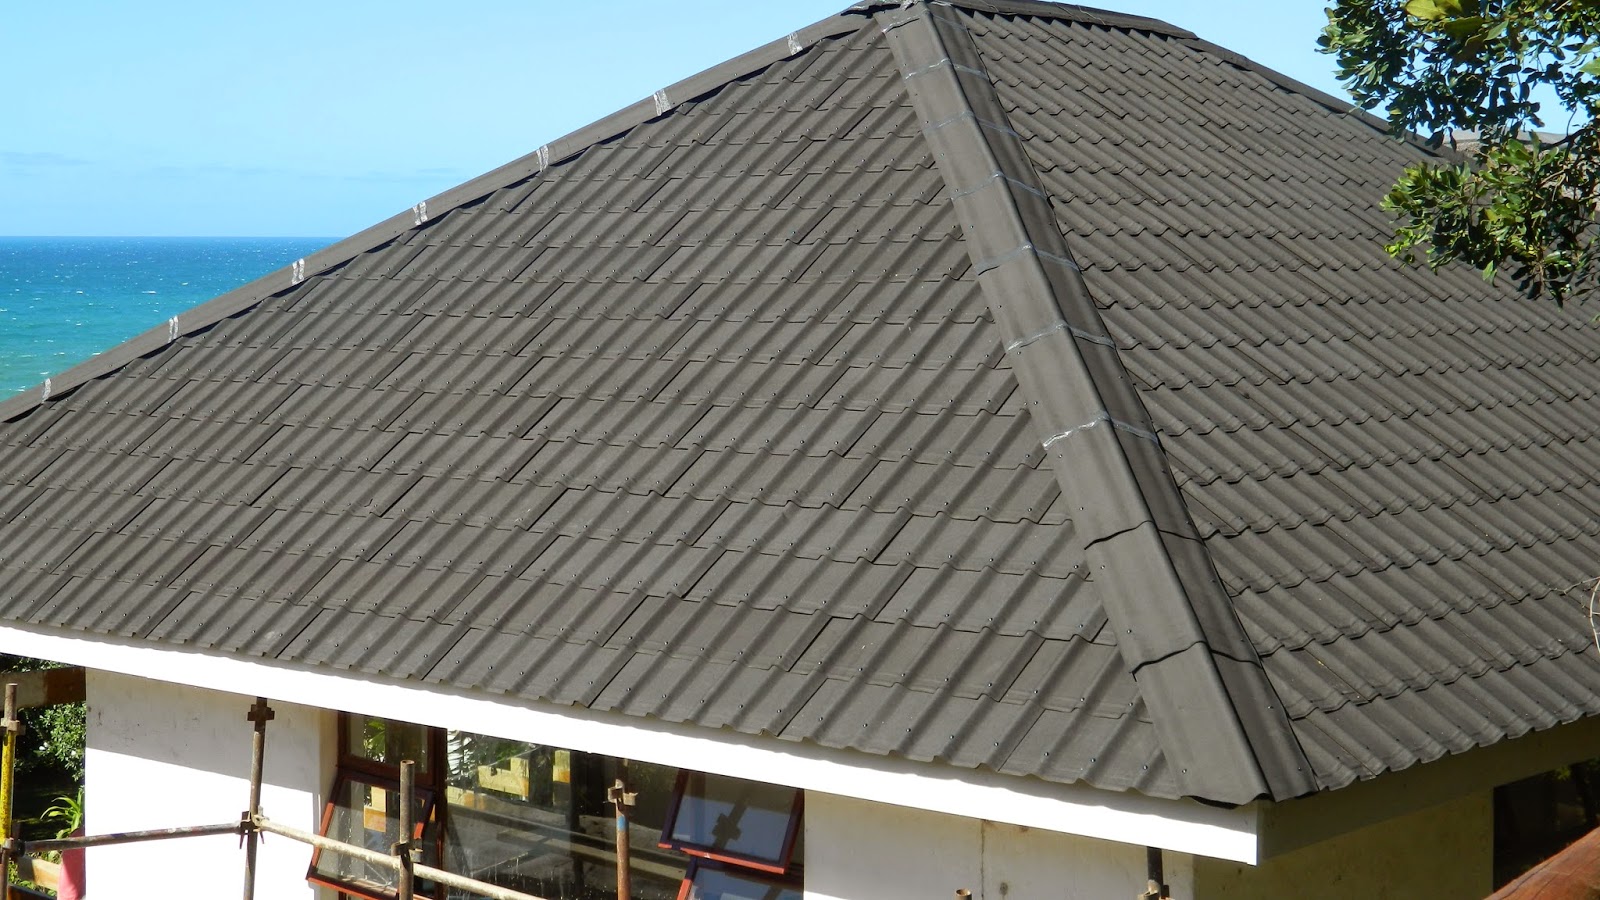 Change a Thatch Roof to Onduvilla Tiles